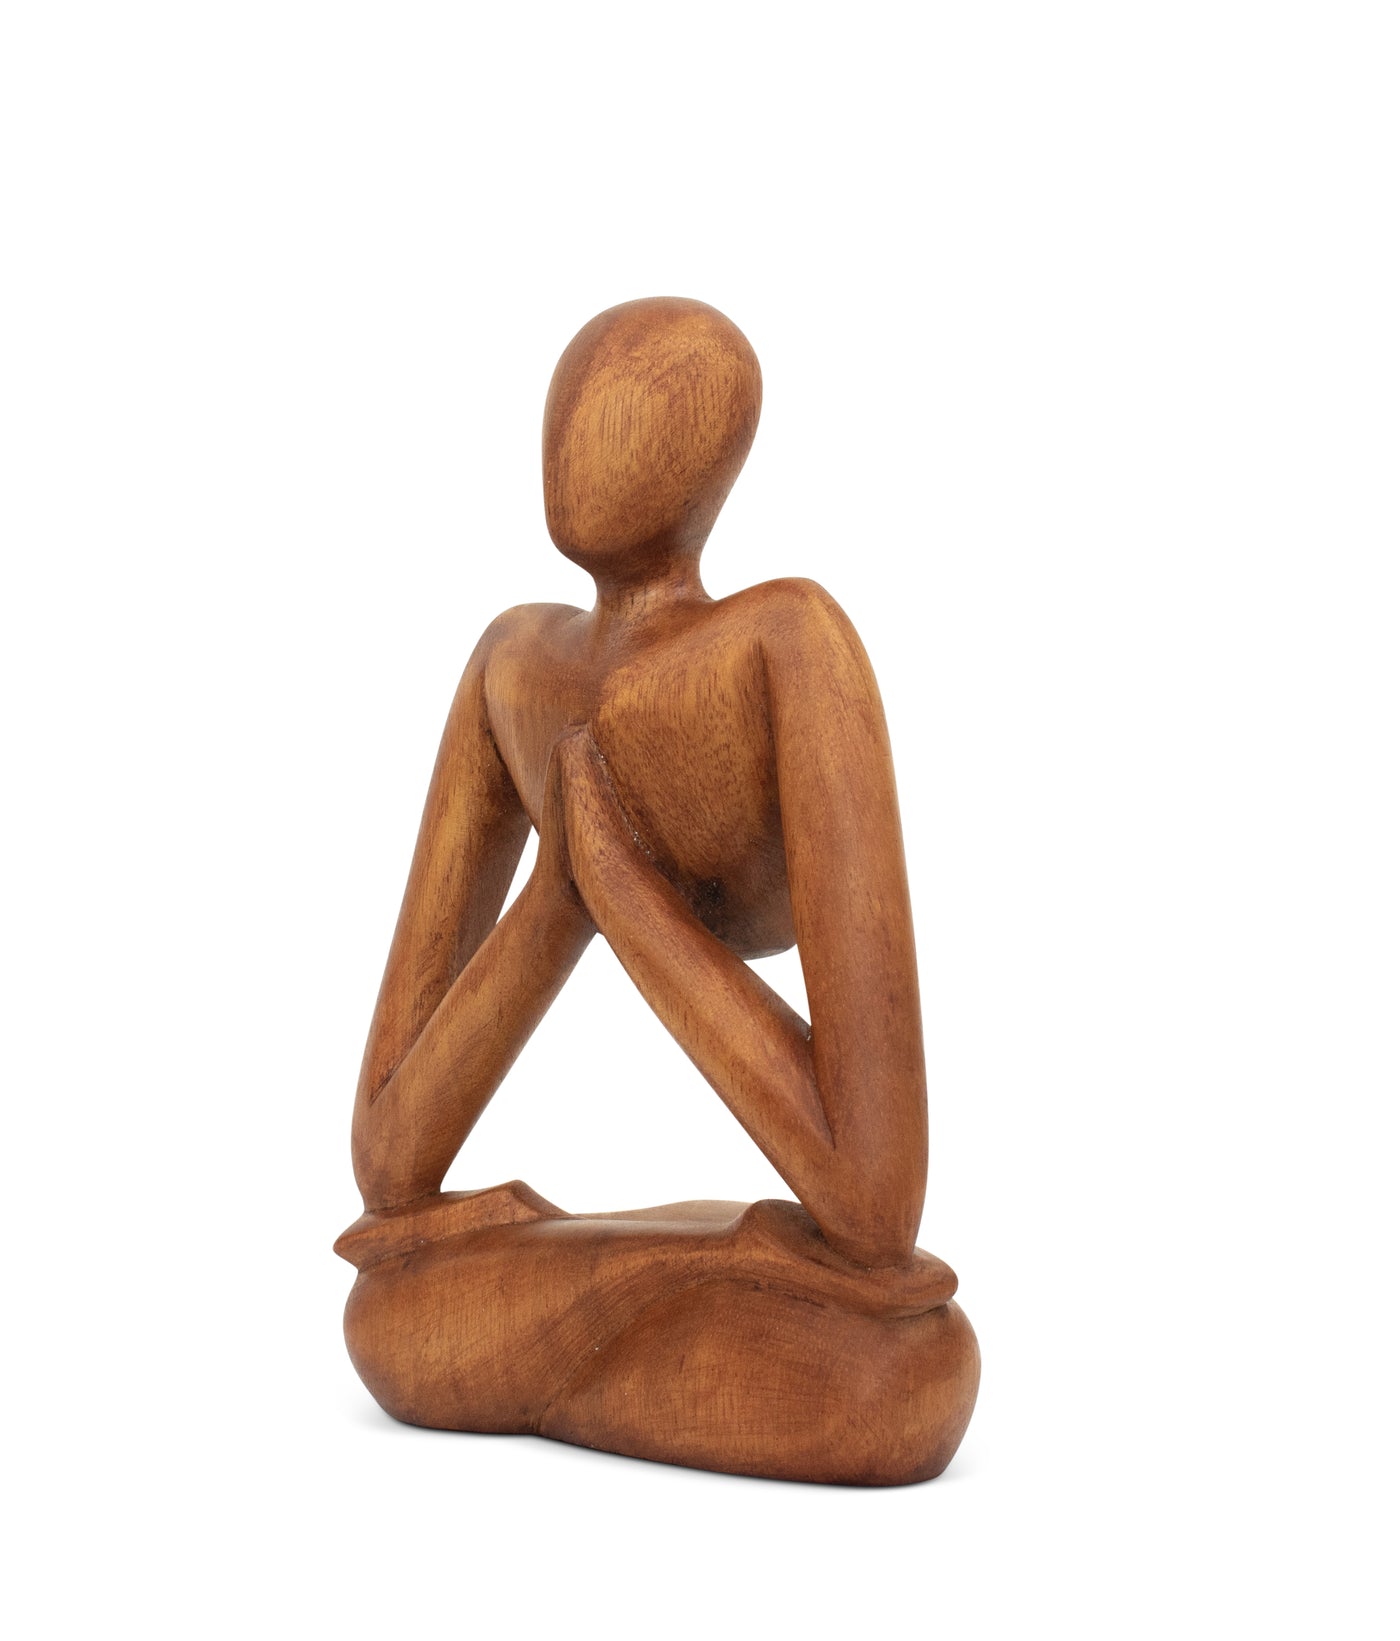 8" Wooden Handmade Mini Yoga Figurines, Yoga Pose Statue, Yoga Room Studio Decor, Mindful Home Decor Yogi Gift, Decorative Shelf Decor Objects - Lotus Pose